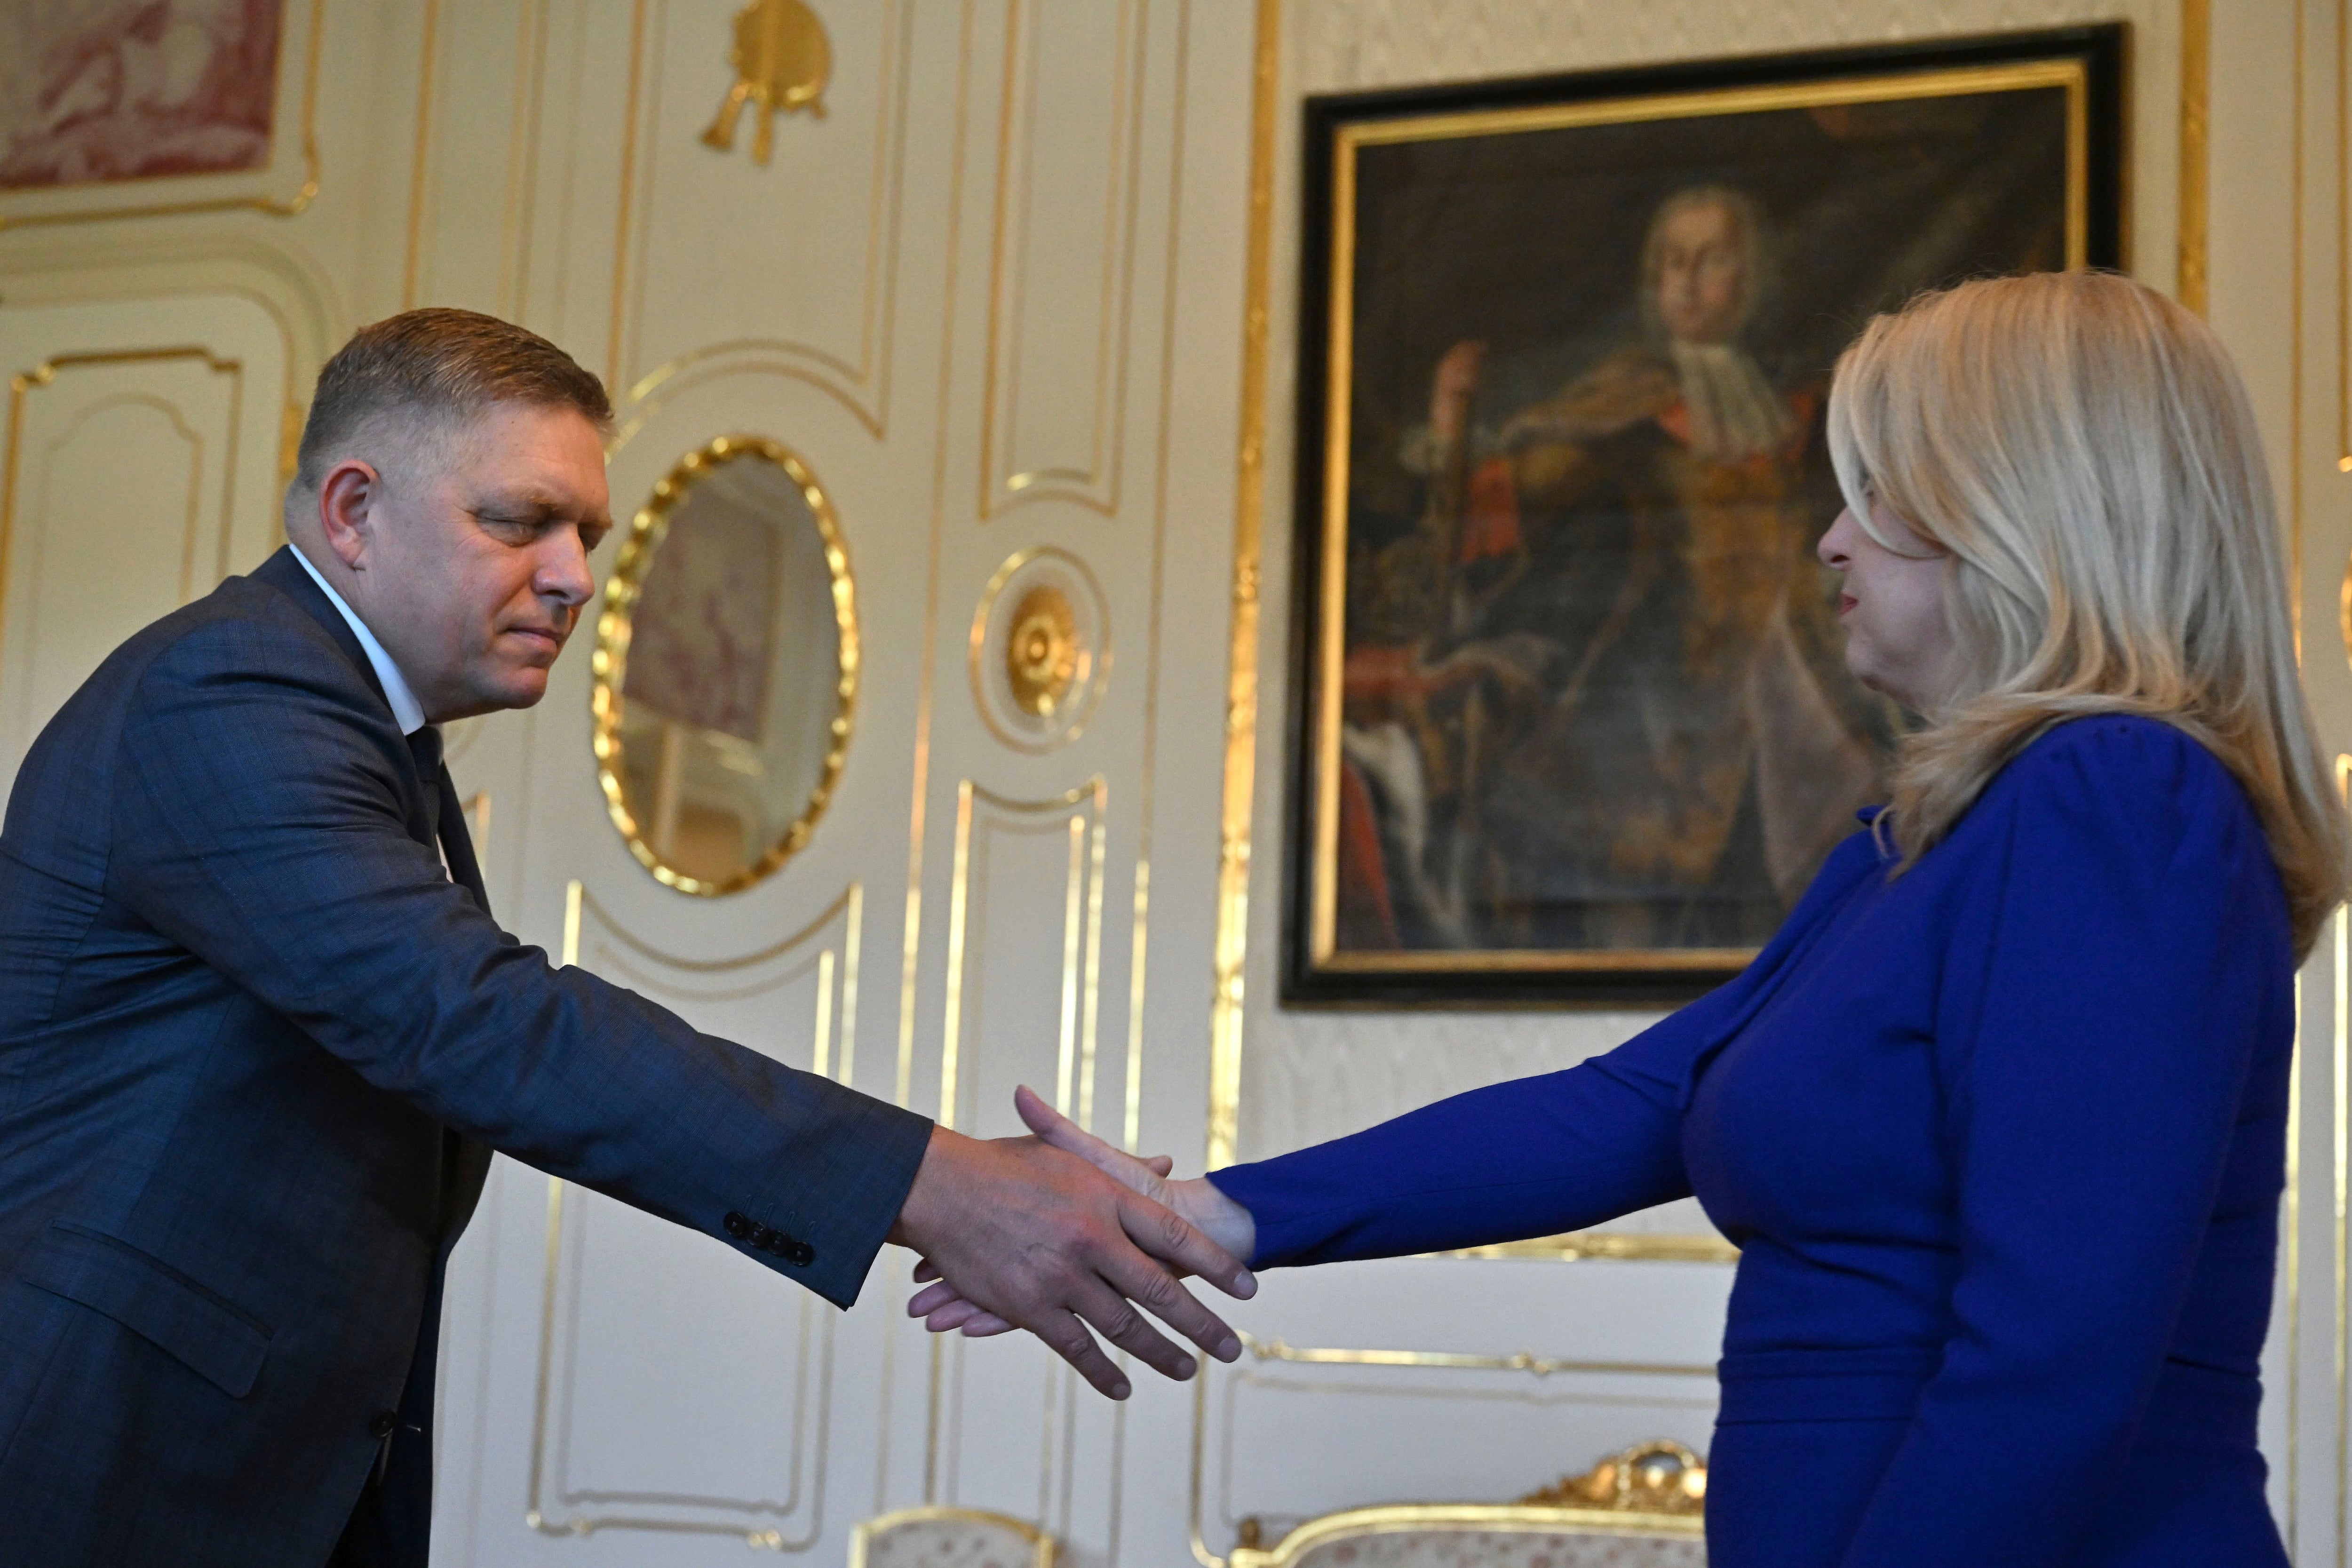 La presidenta de Eslovaquia, Zuzana Caputova, estrecha la mano de Robert Fico, líder del partido Smer, en Bratislava, Eslovaquia, el lunes (Vaclav Salek/CTK vía AP)